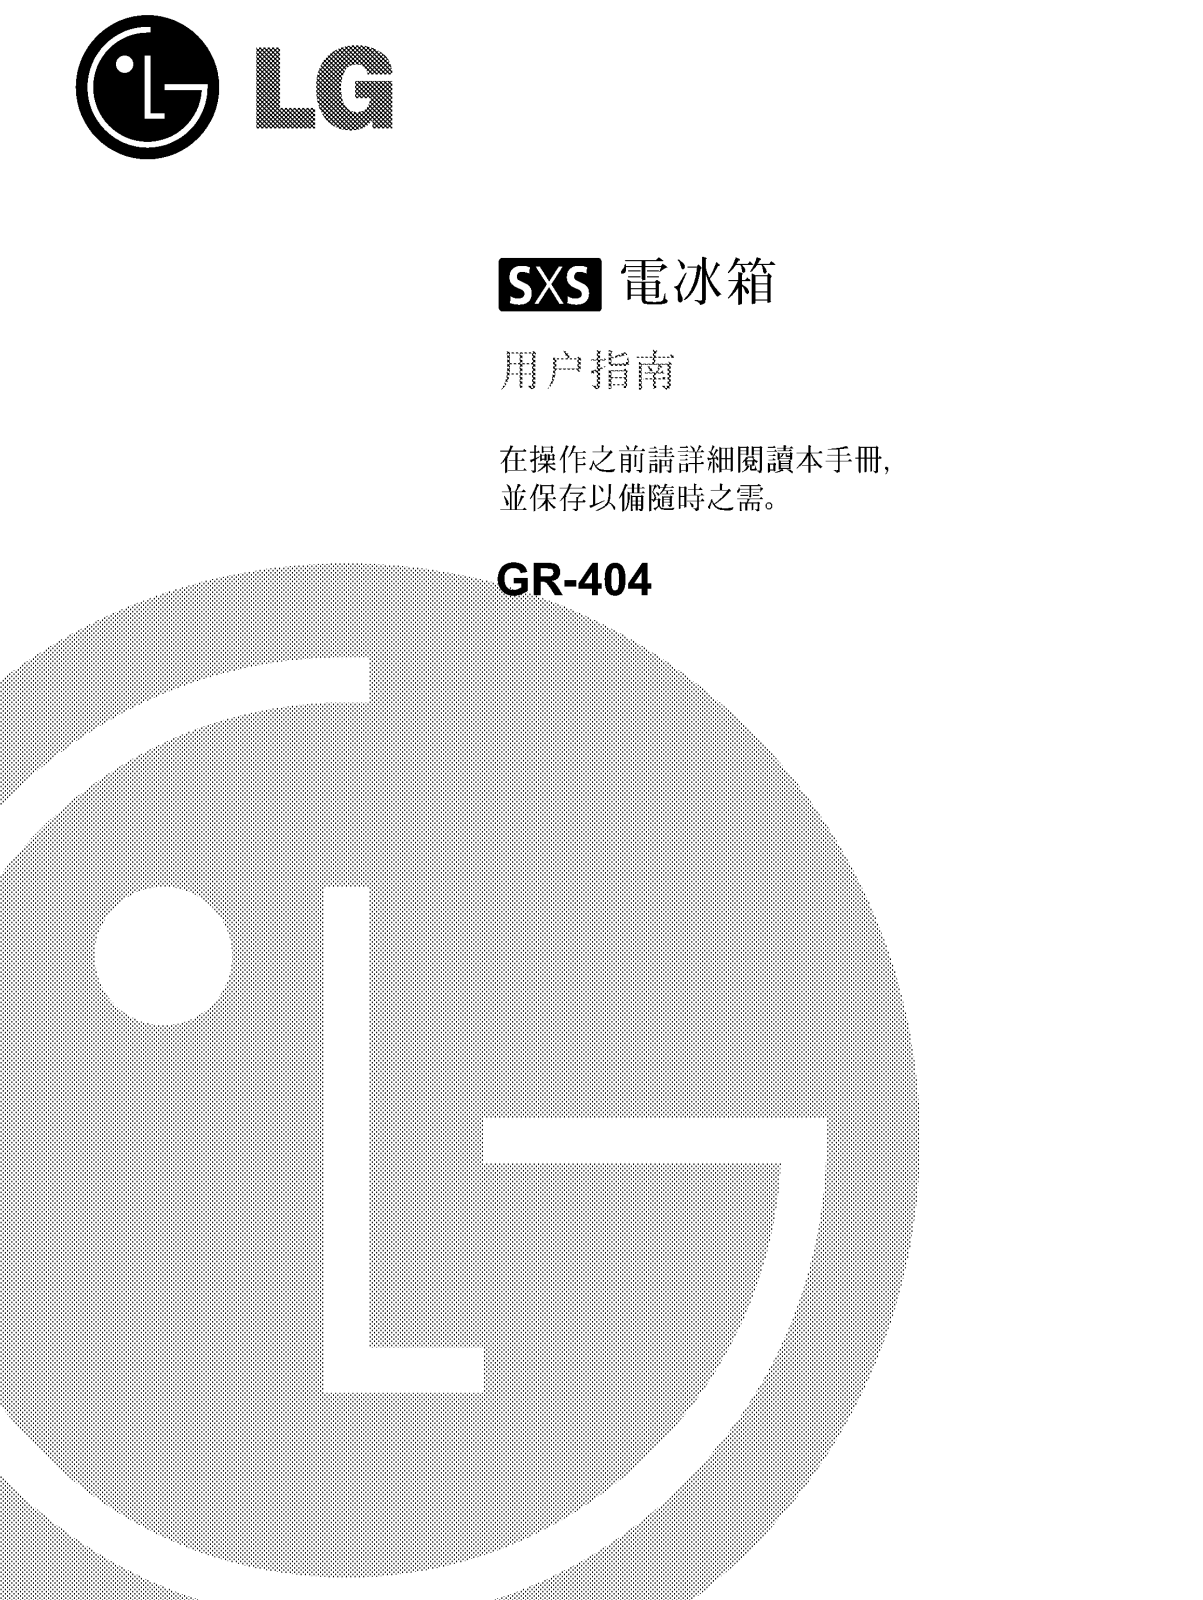 Lg GR-404(CS), GR-404(RC), GR-404(WC) User Manual